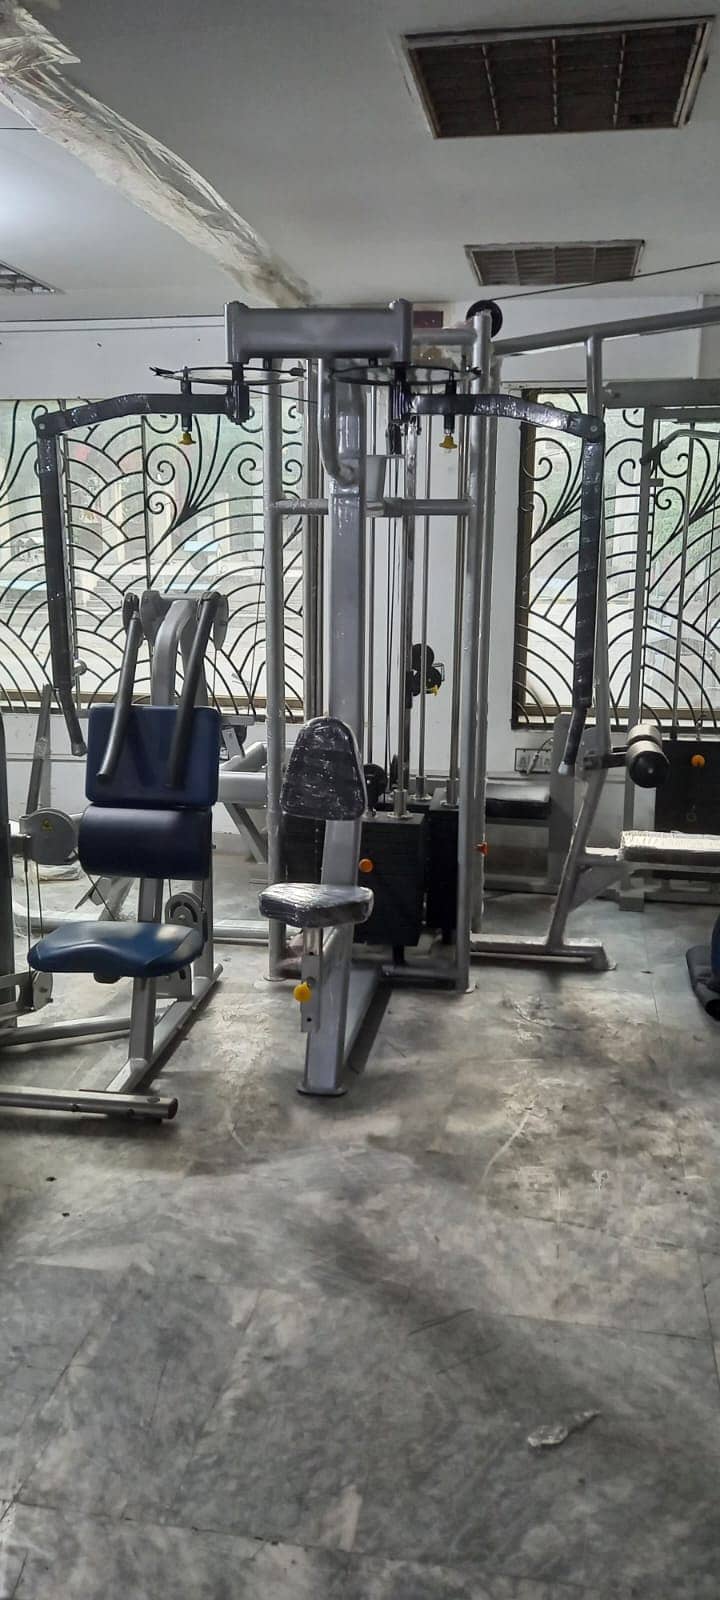 multi functional machine dumbbell gym setup treadmill elliptical plate 11